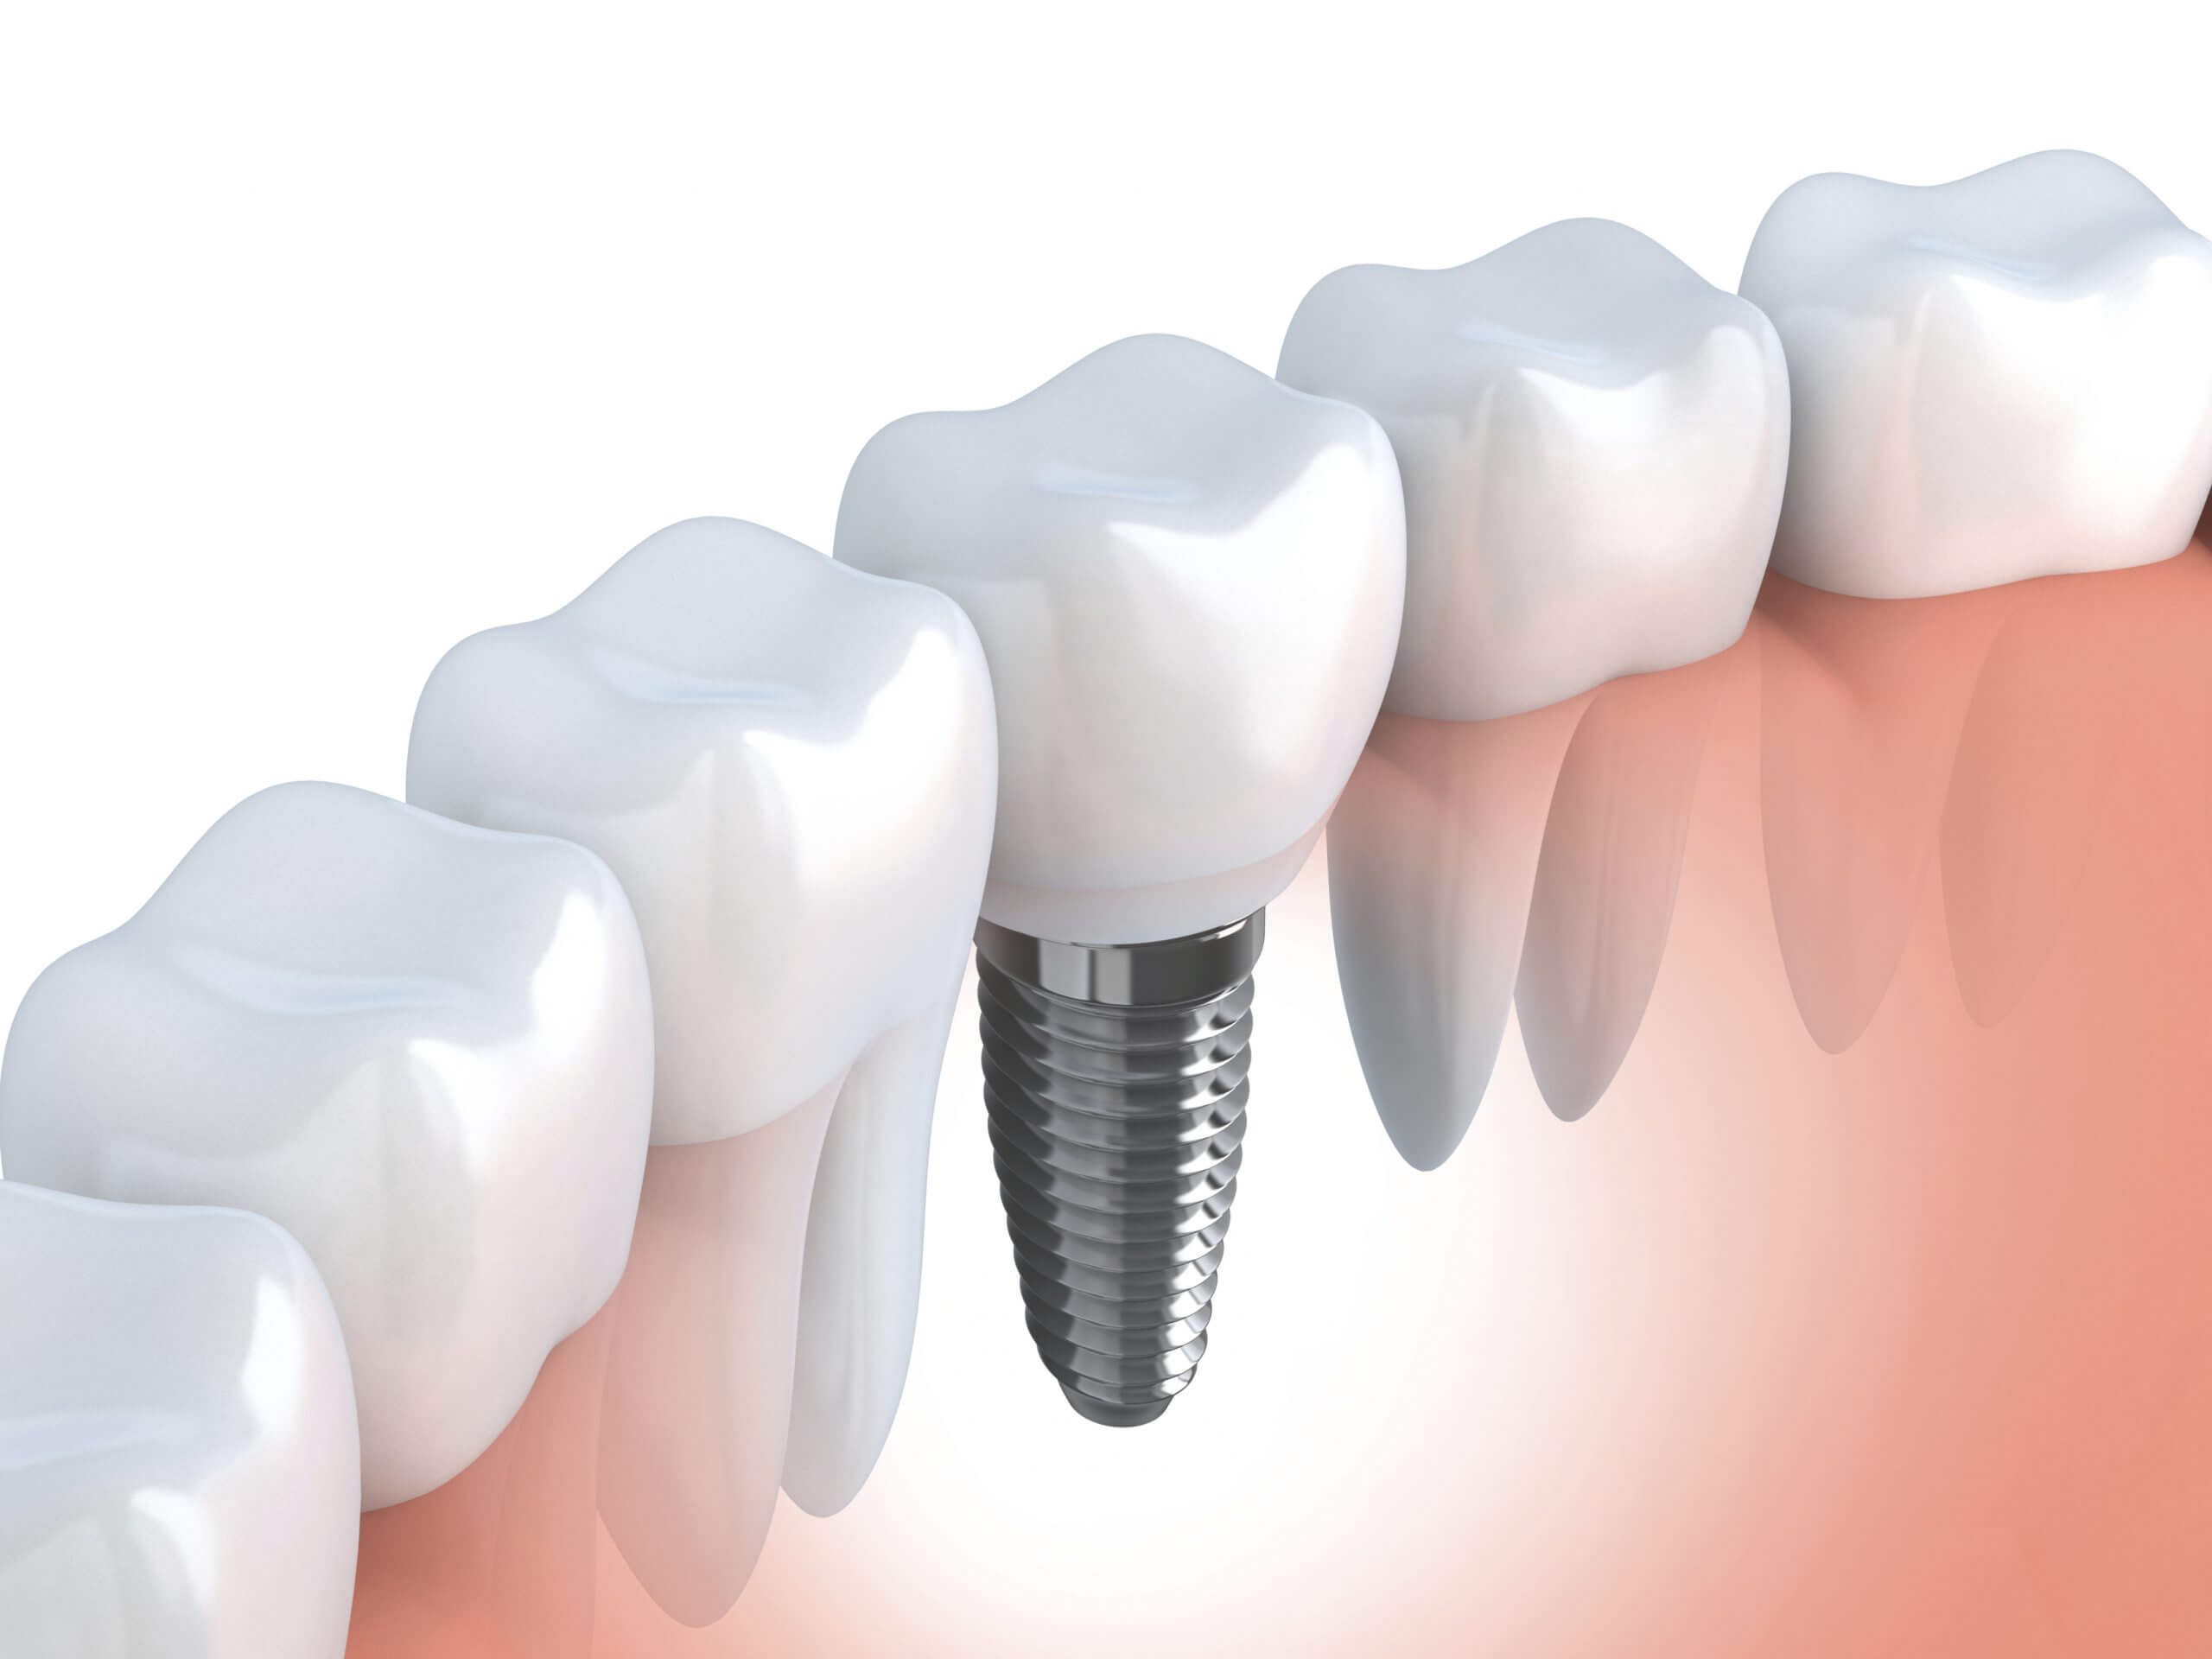 Implant dentaire chez dentiste et Cie Quebec